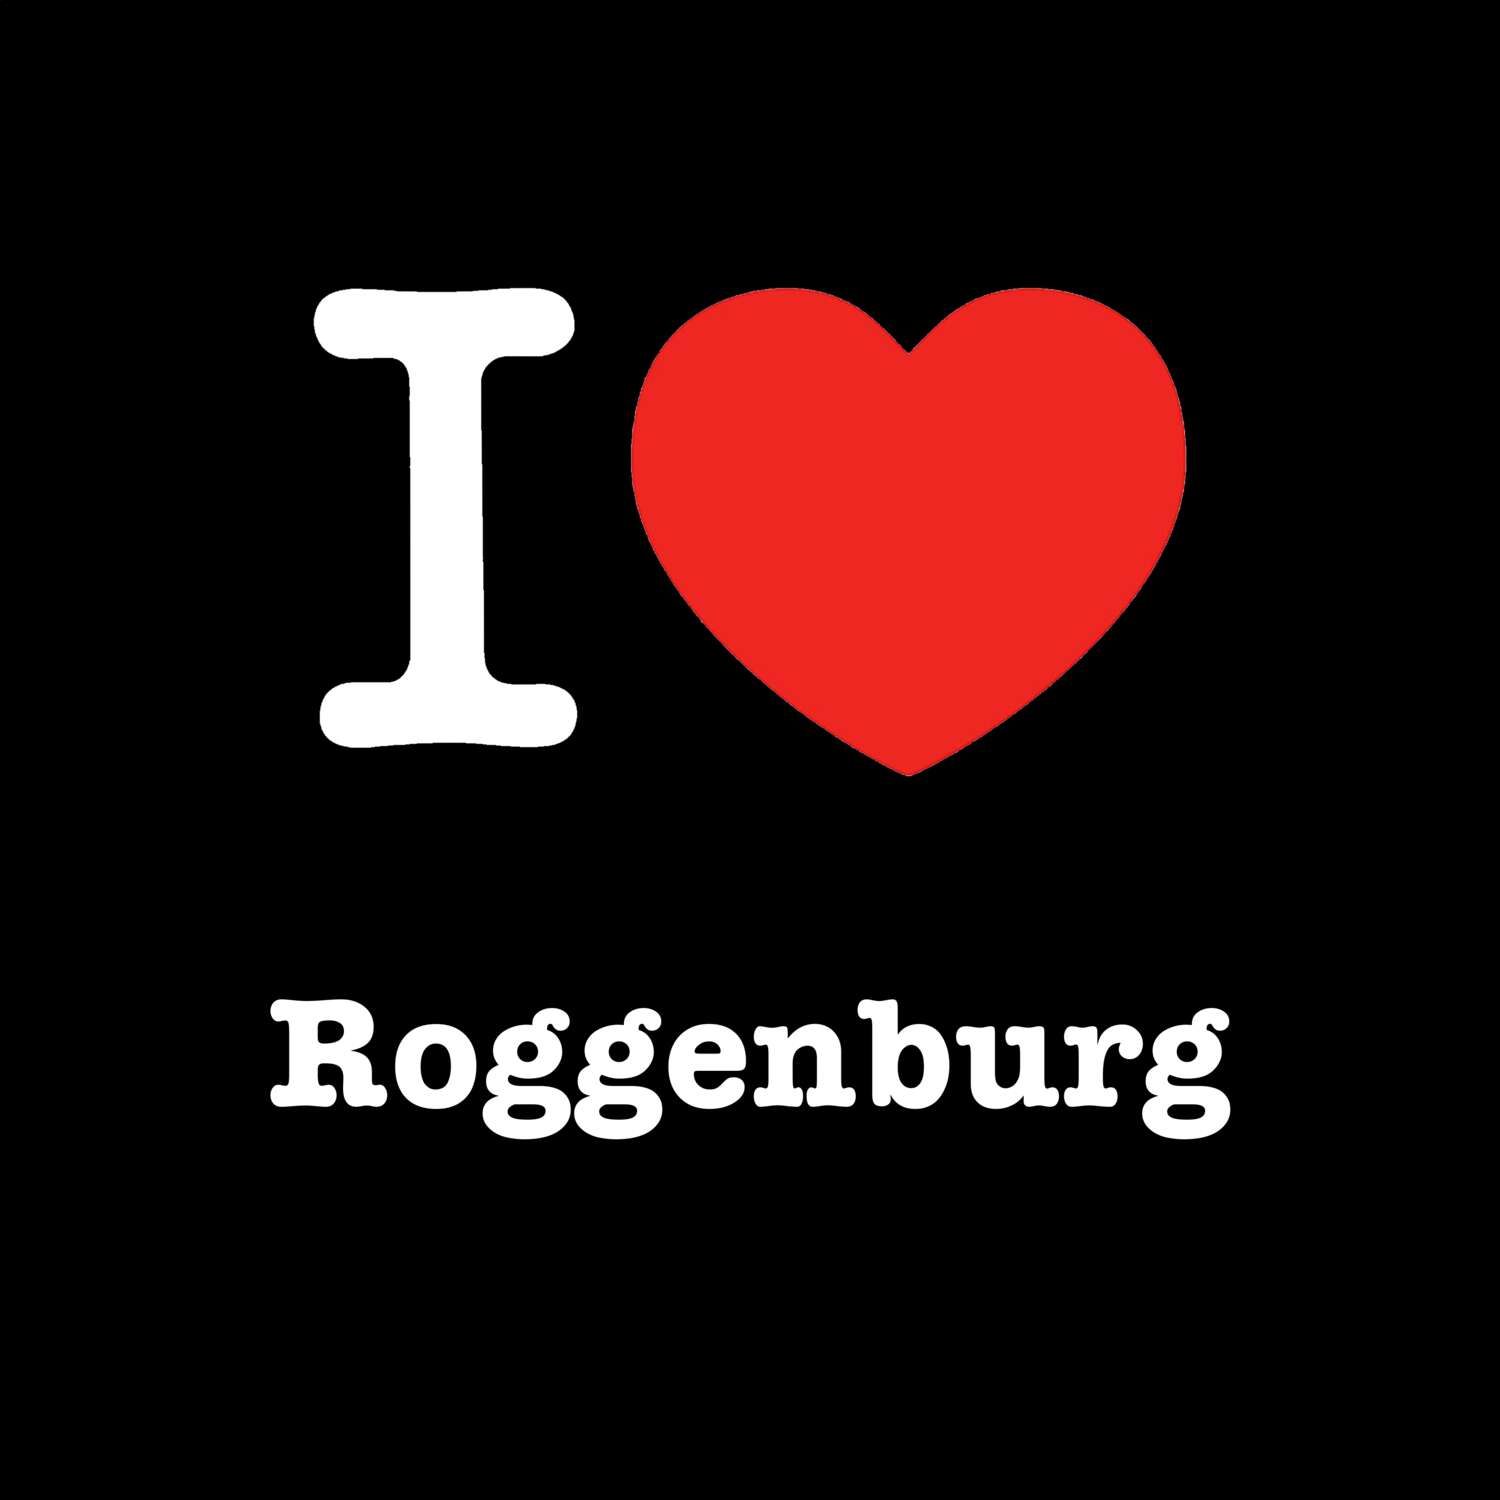 Roggenburg T-Shirt »I love«